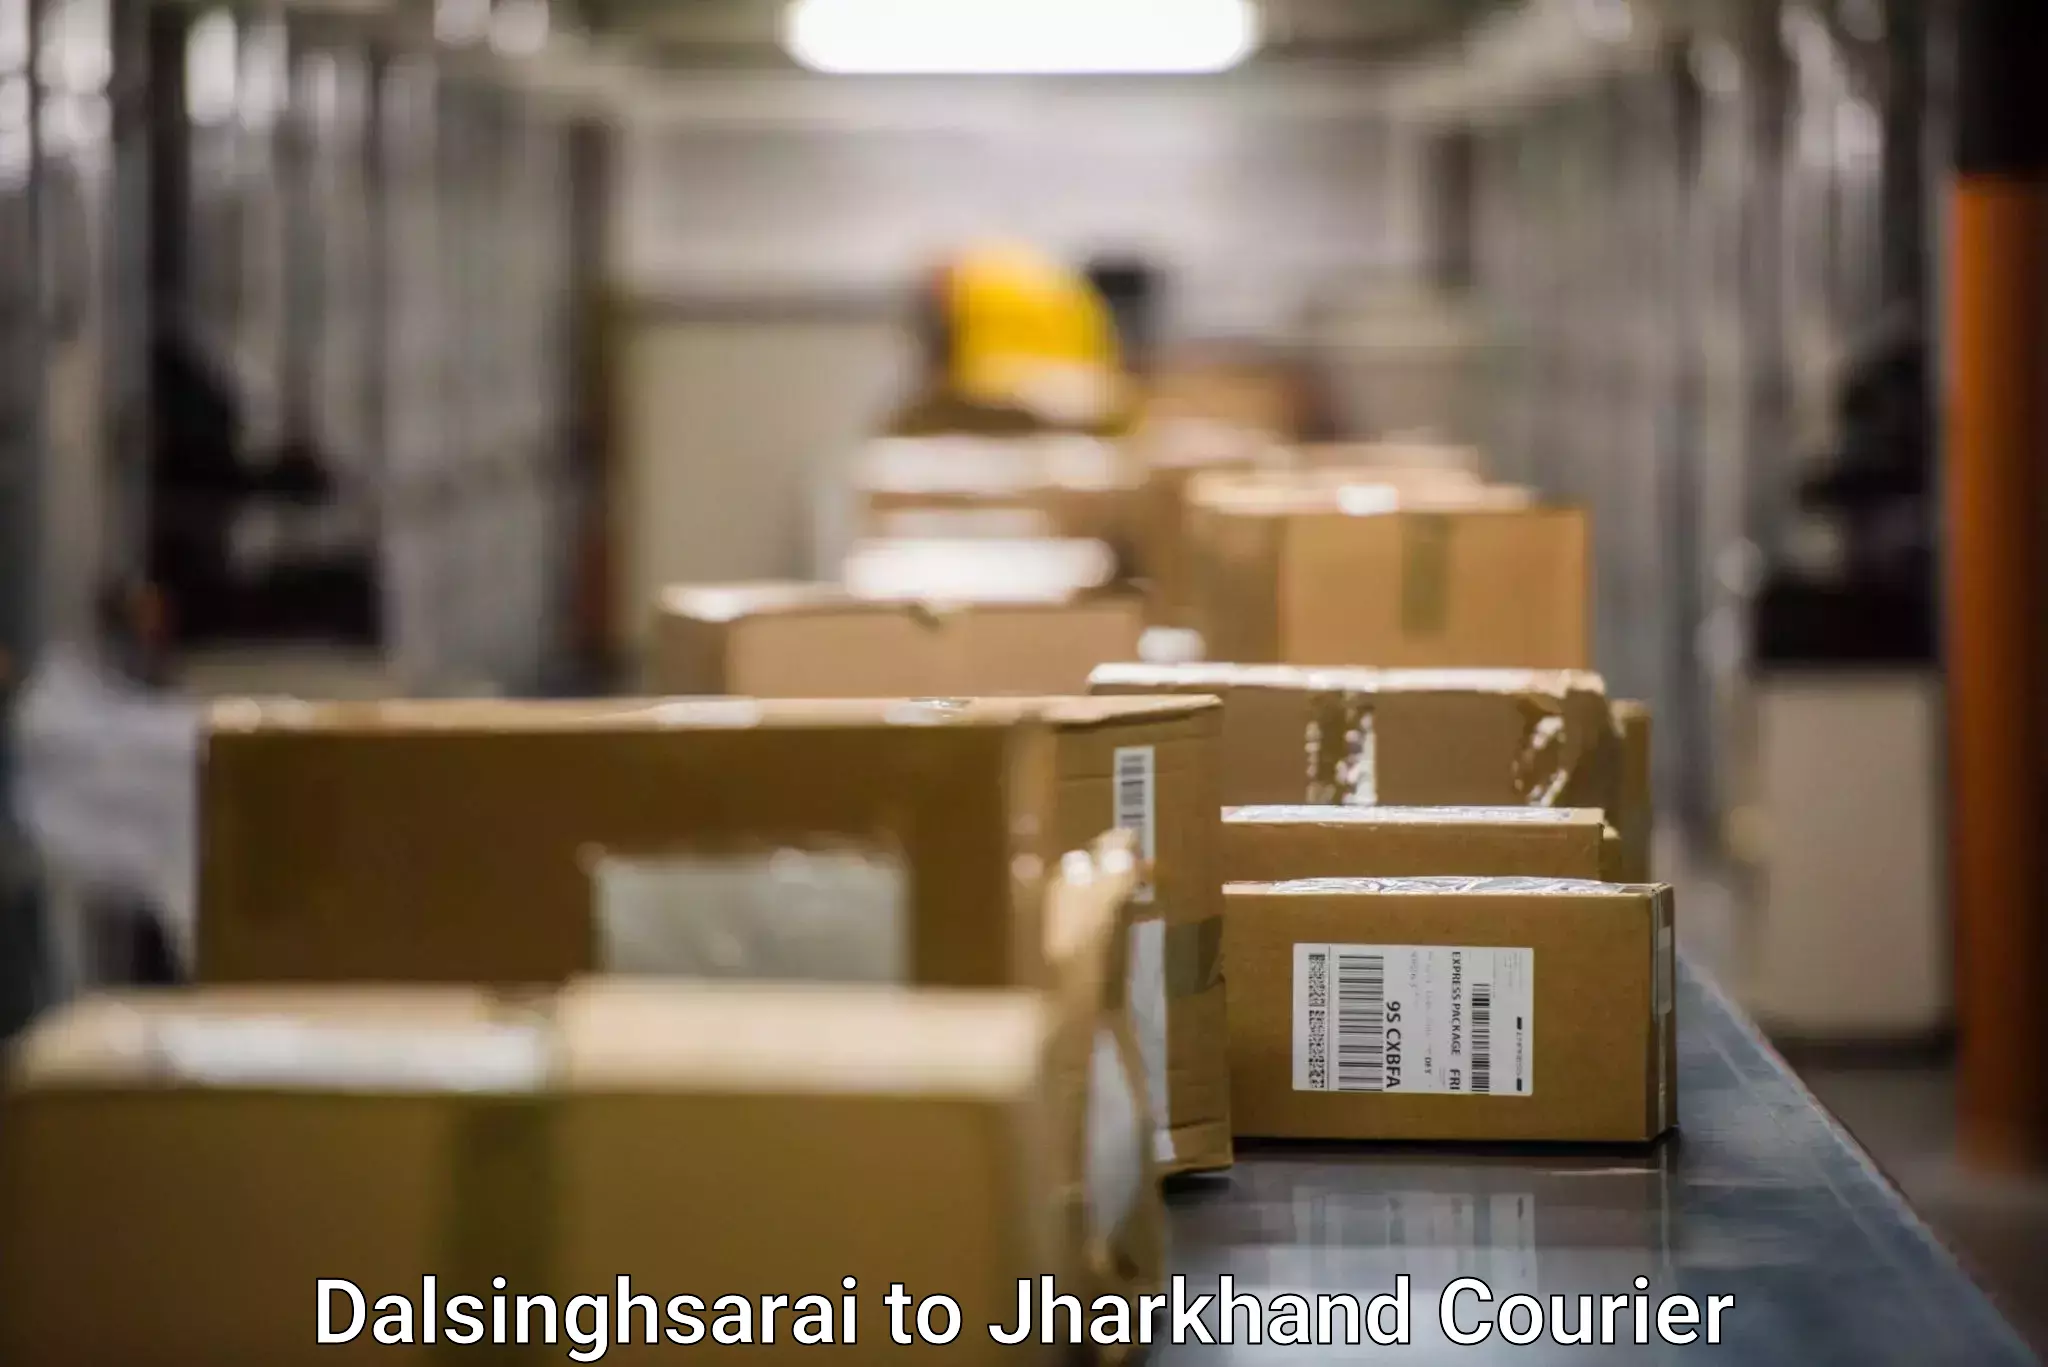 Modern delivery technologies Dalsinghsarai to Isri